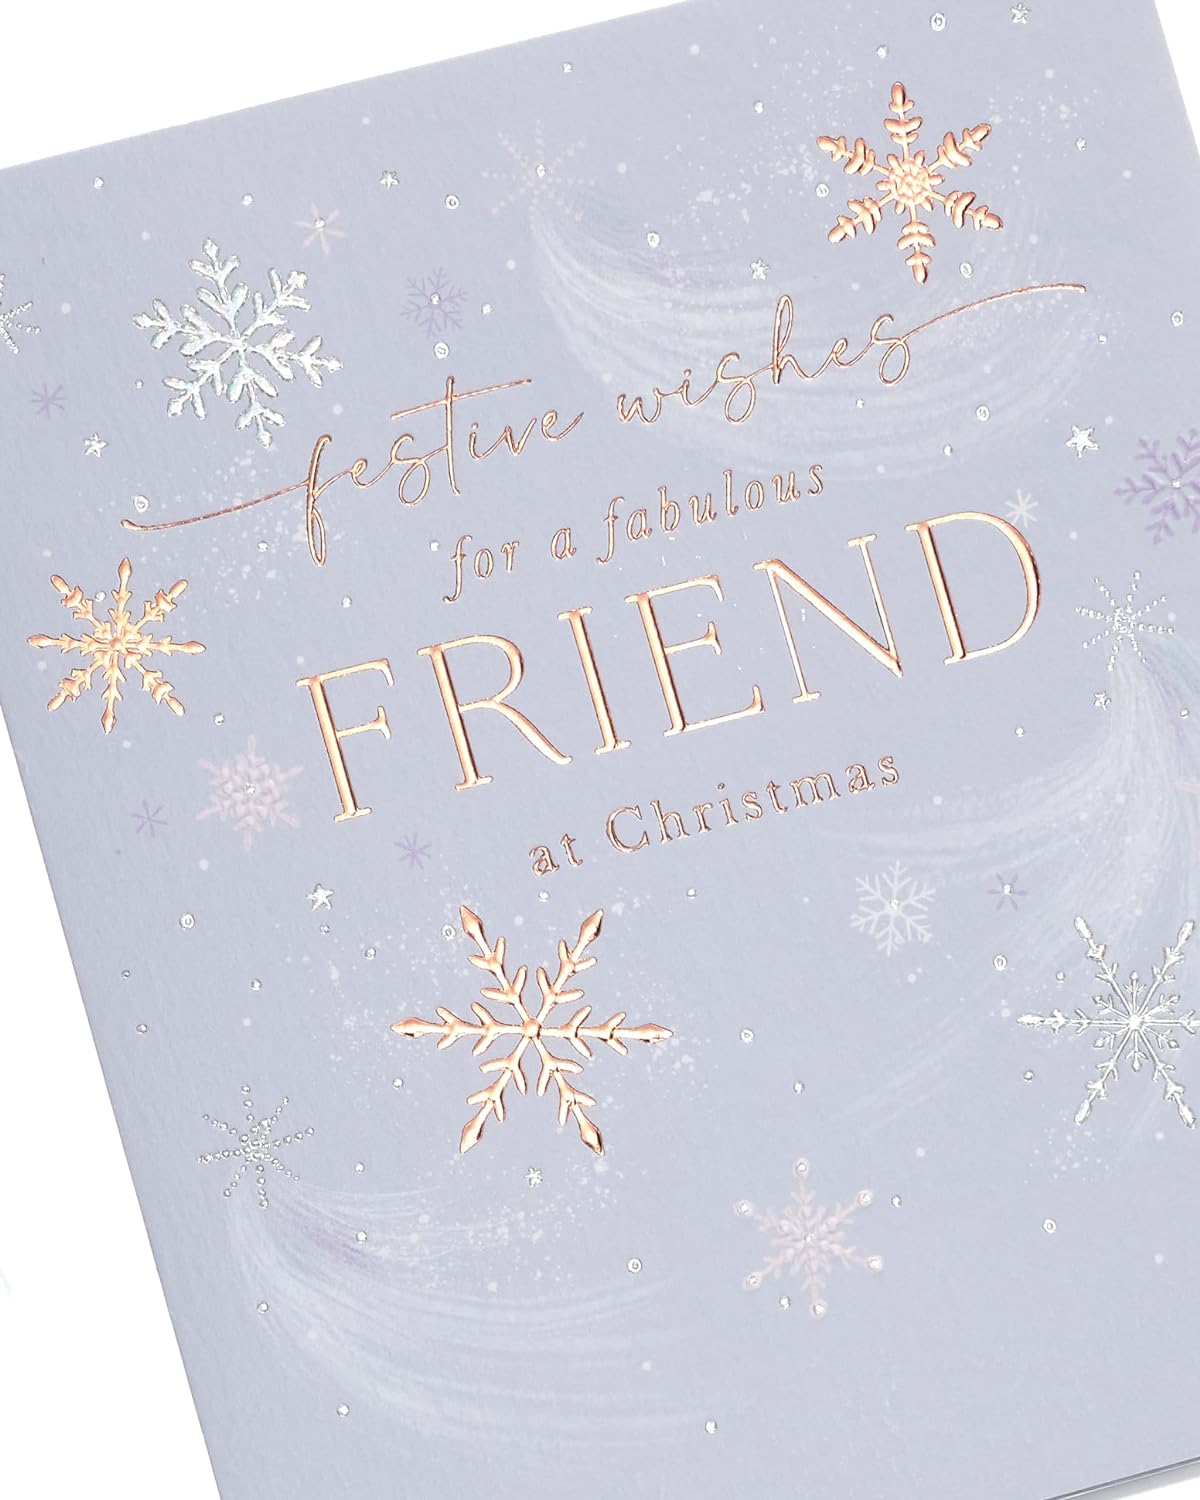 Friend Christmas Card Snowflakes Design 